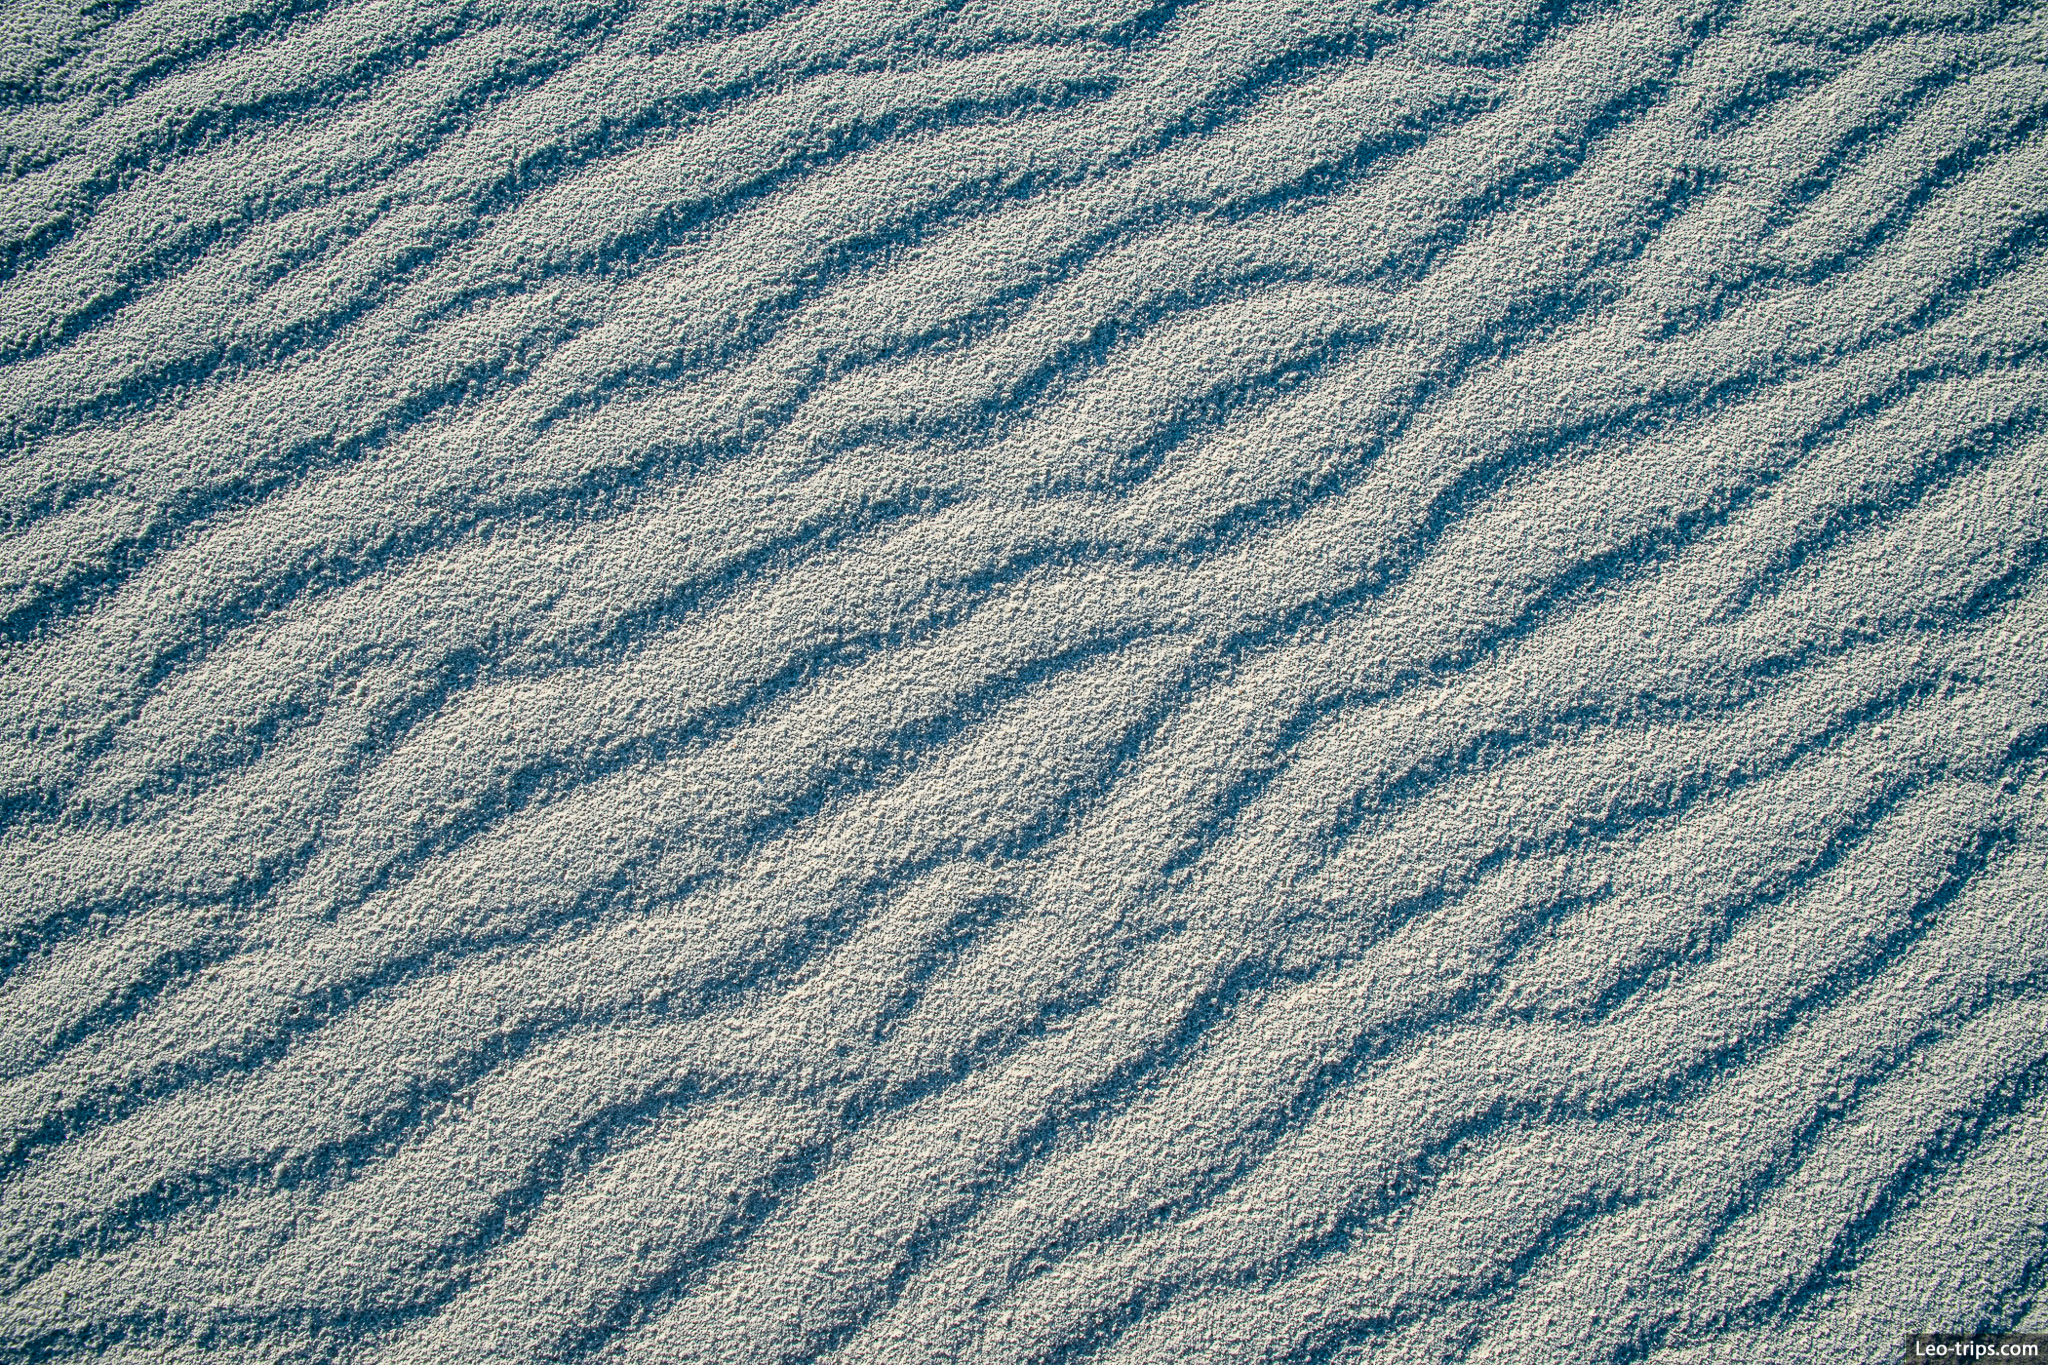 dune ripples texture white sands national park